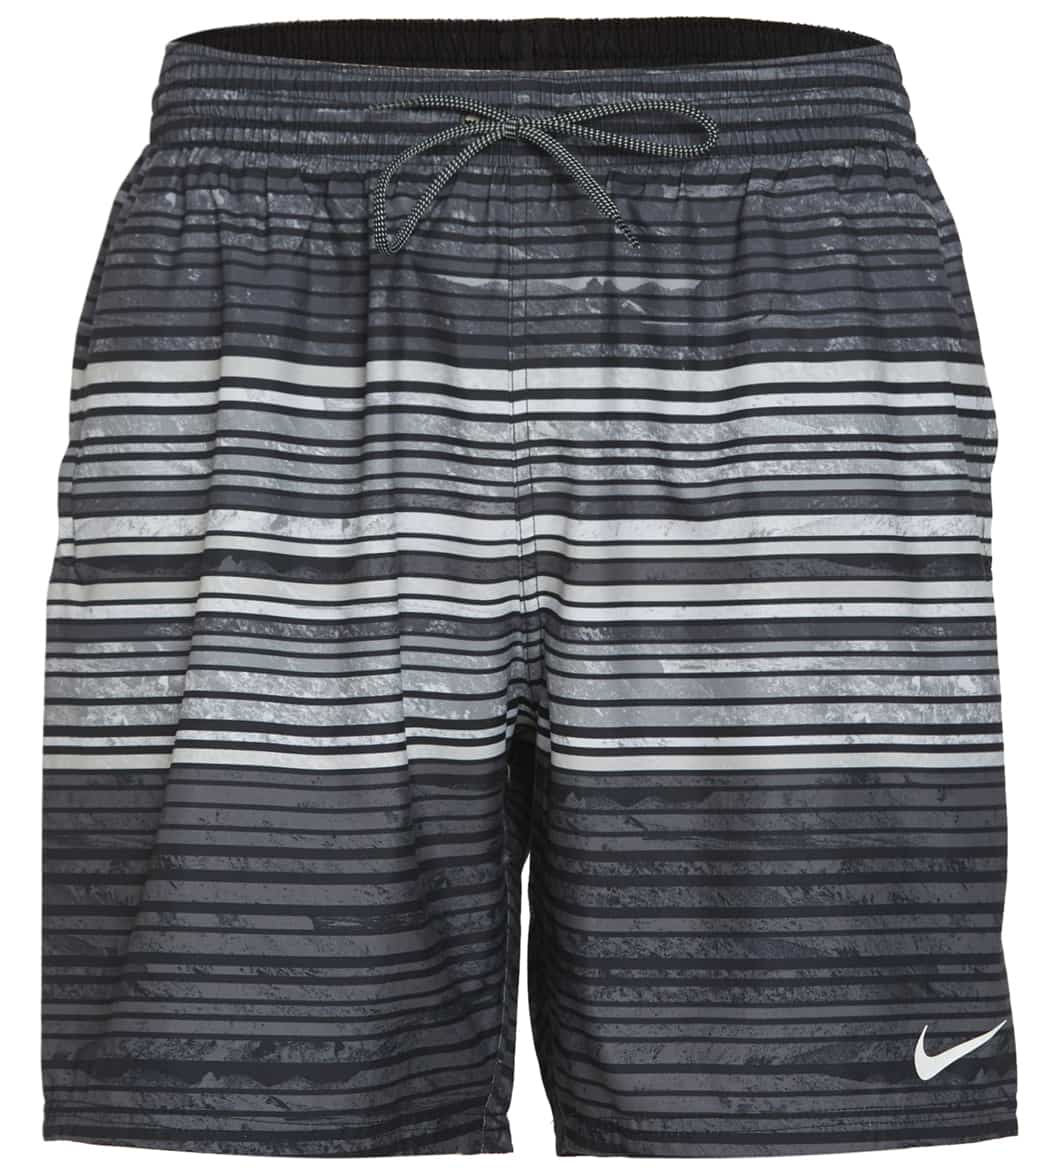 Nike Men's 18 Oxidized Stripe Volley Short - Black Small - Swimoutlet.com